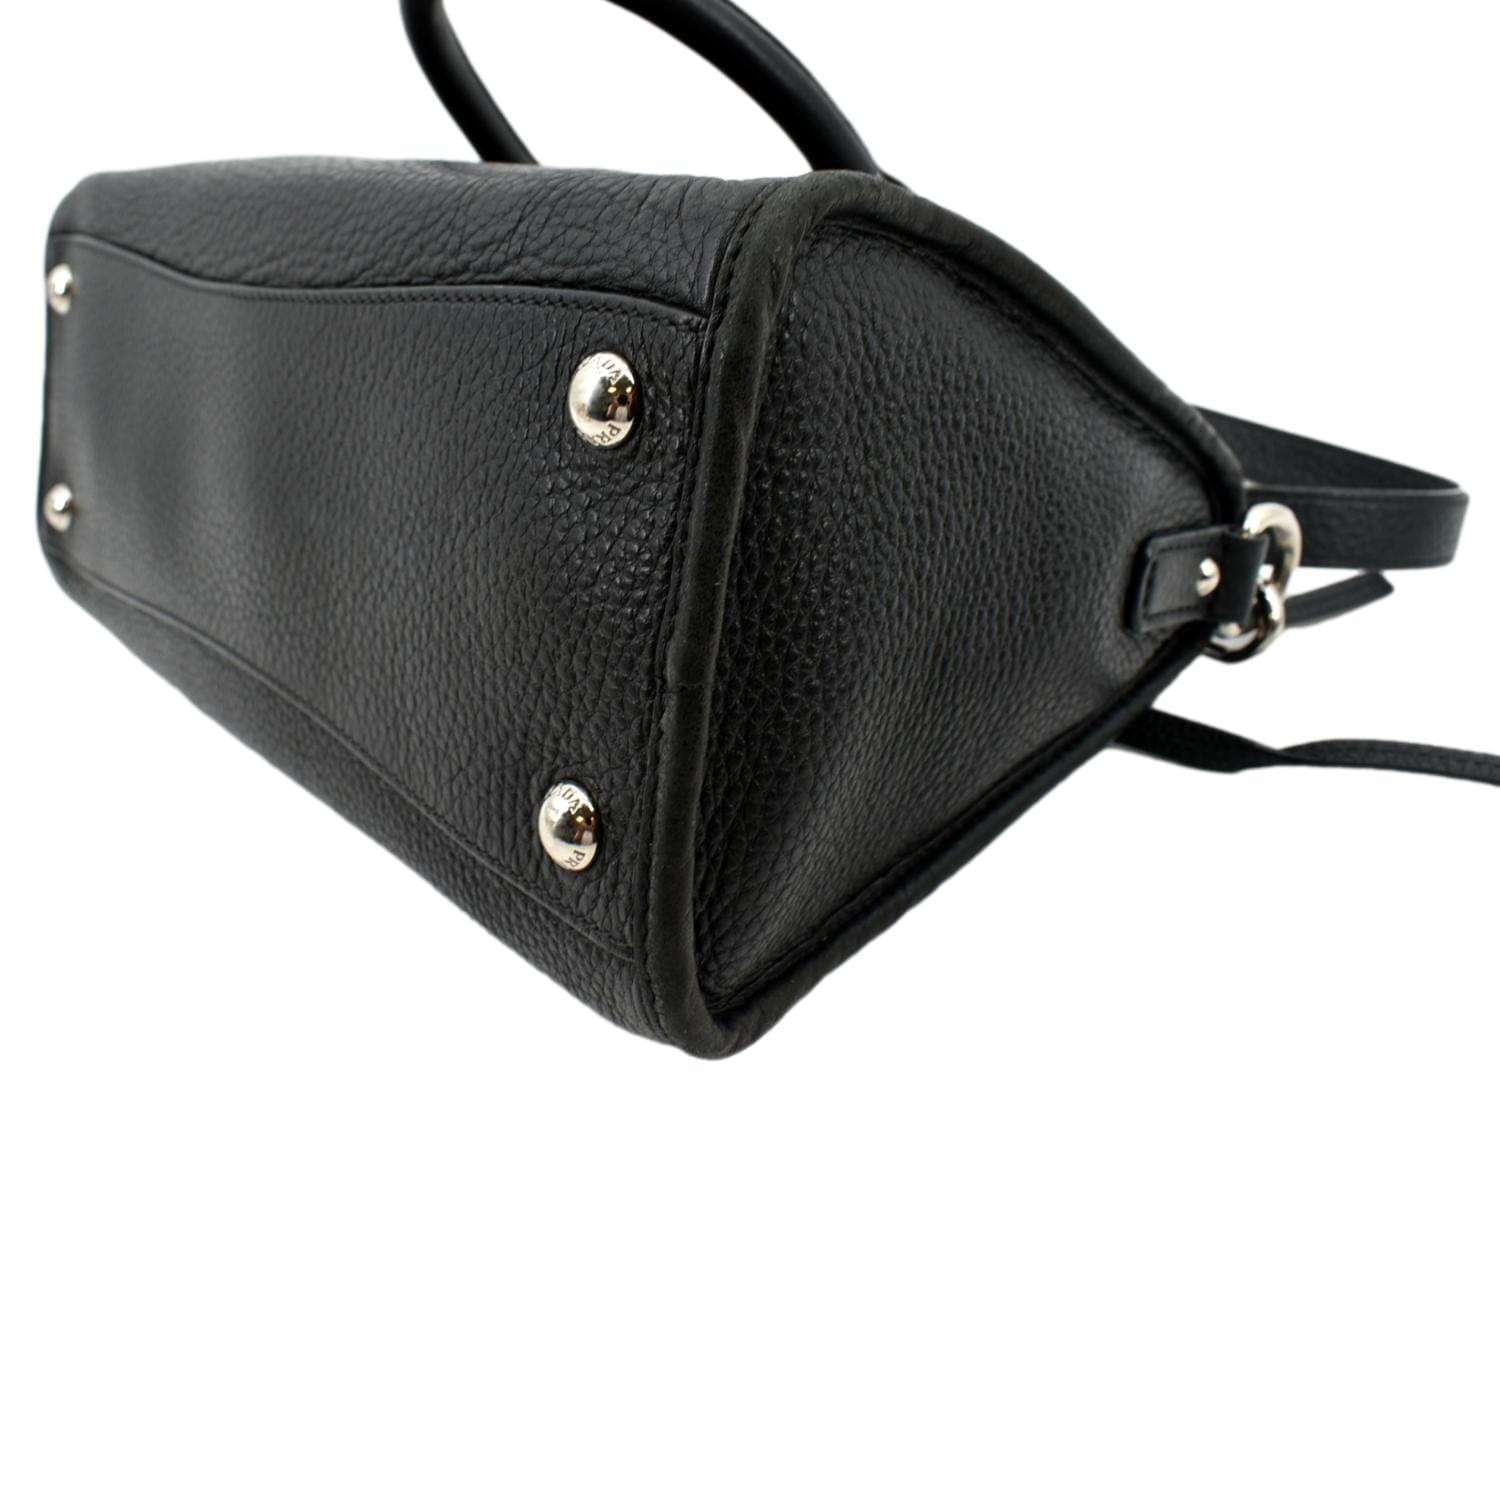 New Prada Vitello Phenix Black Leather Embossed Logo Hobo Tote Bag 1BC051